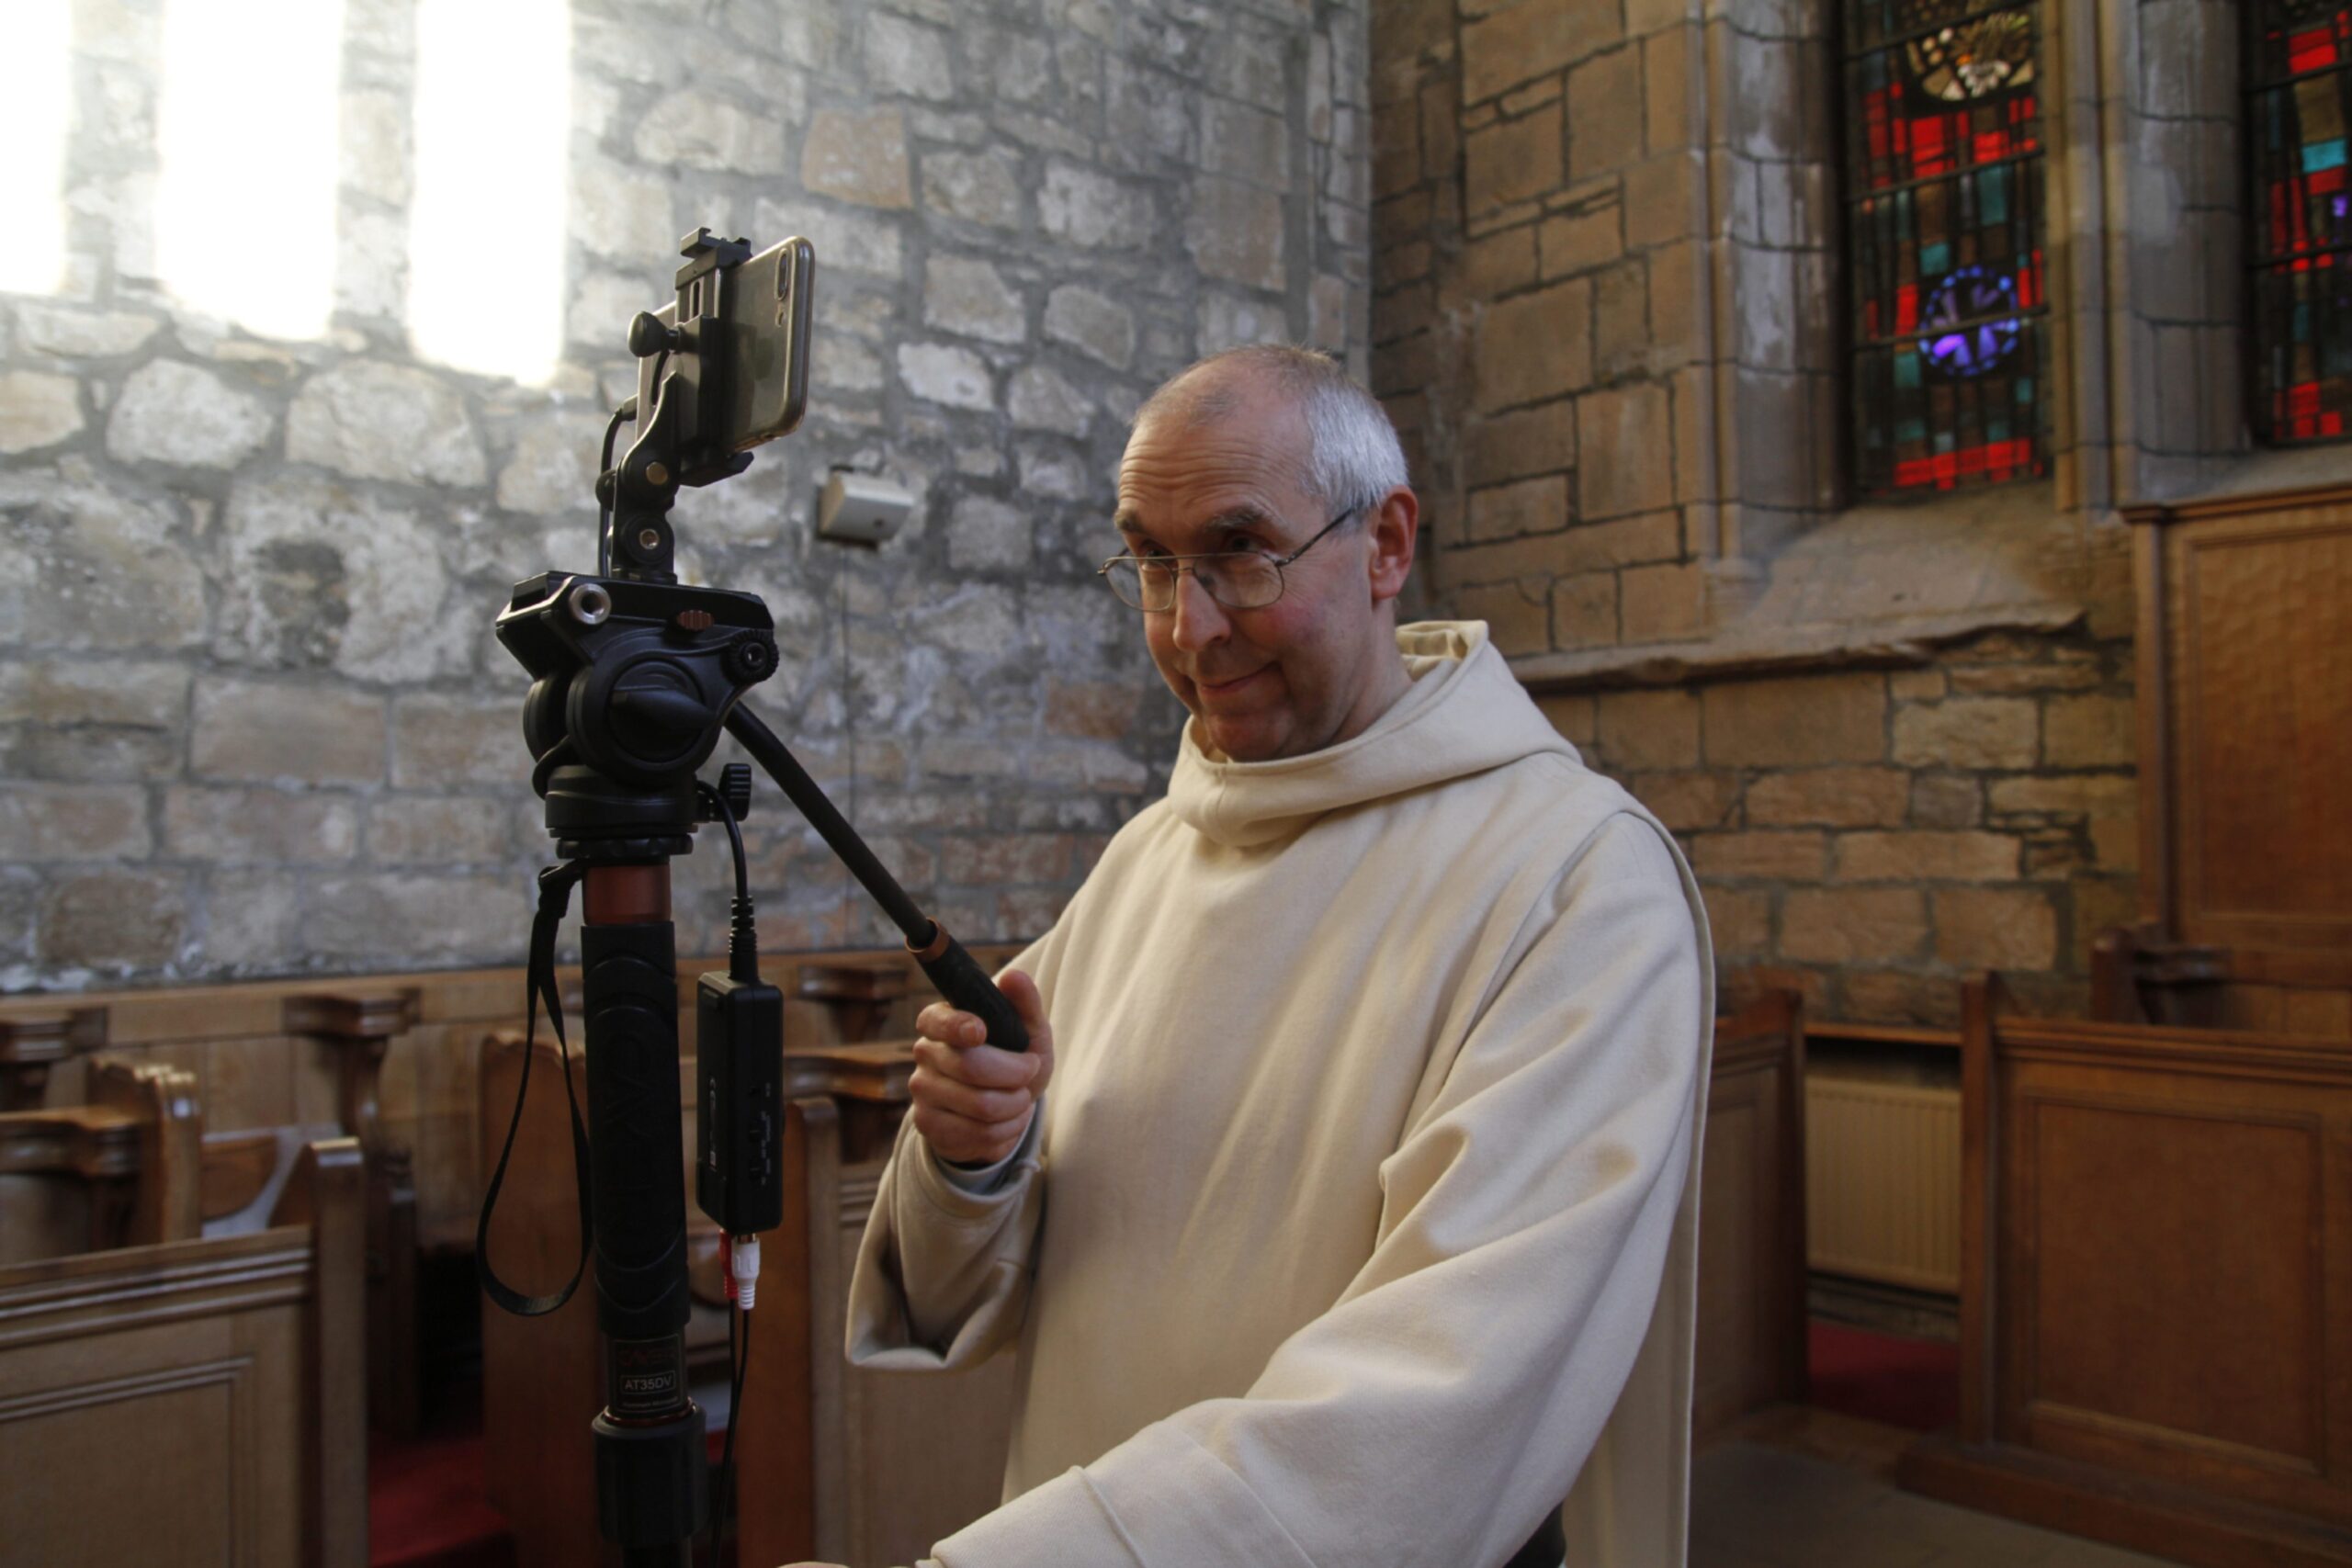 Monk behind video camera. 